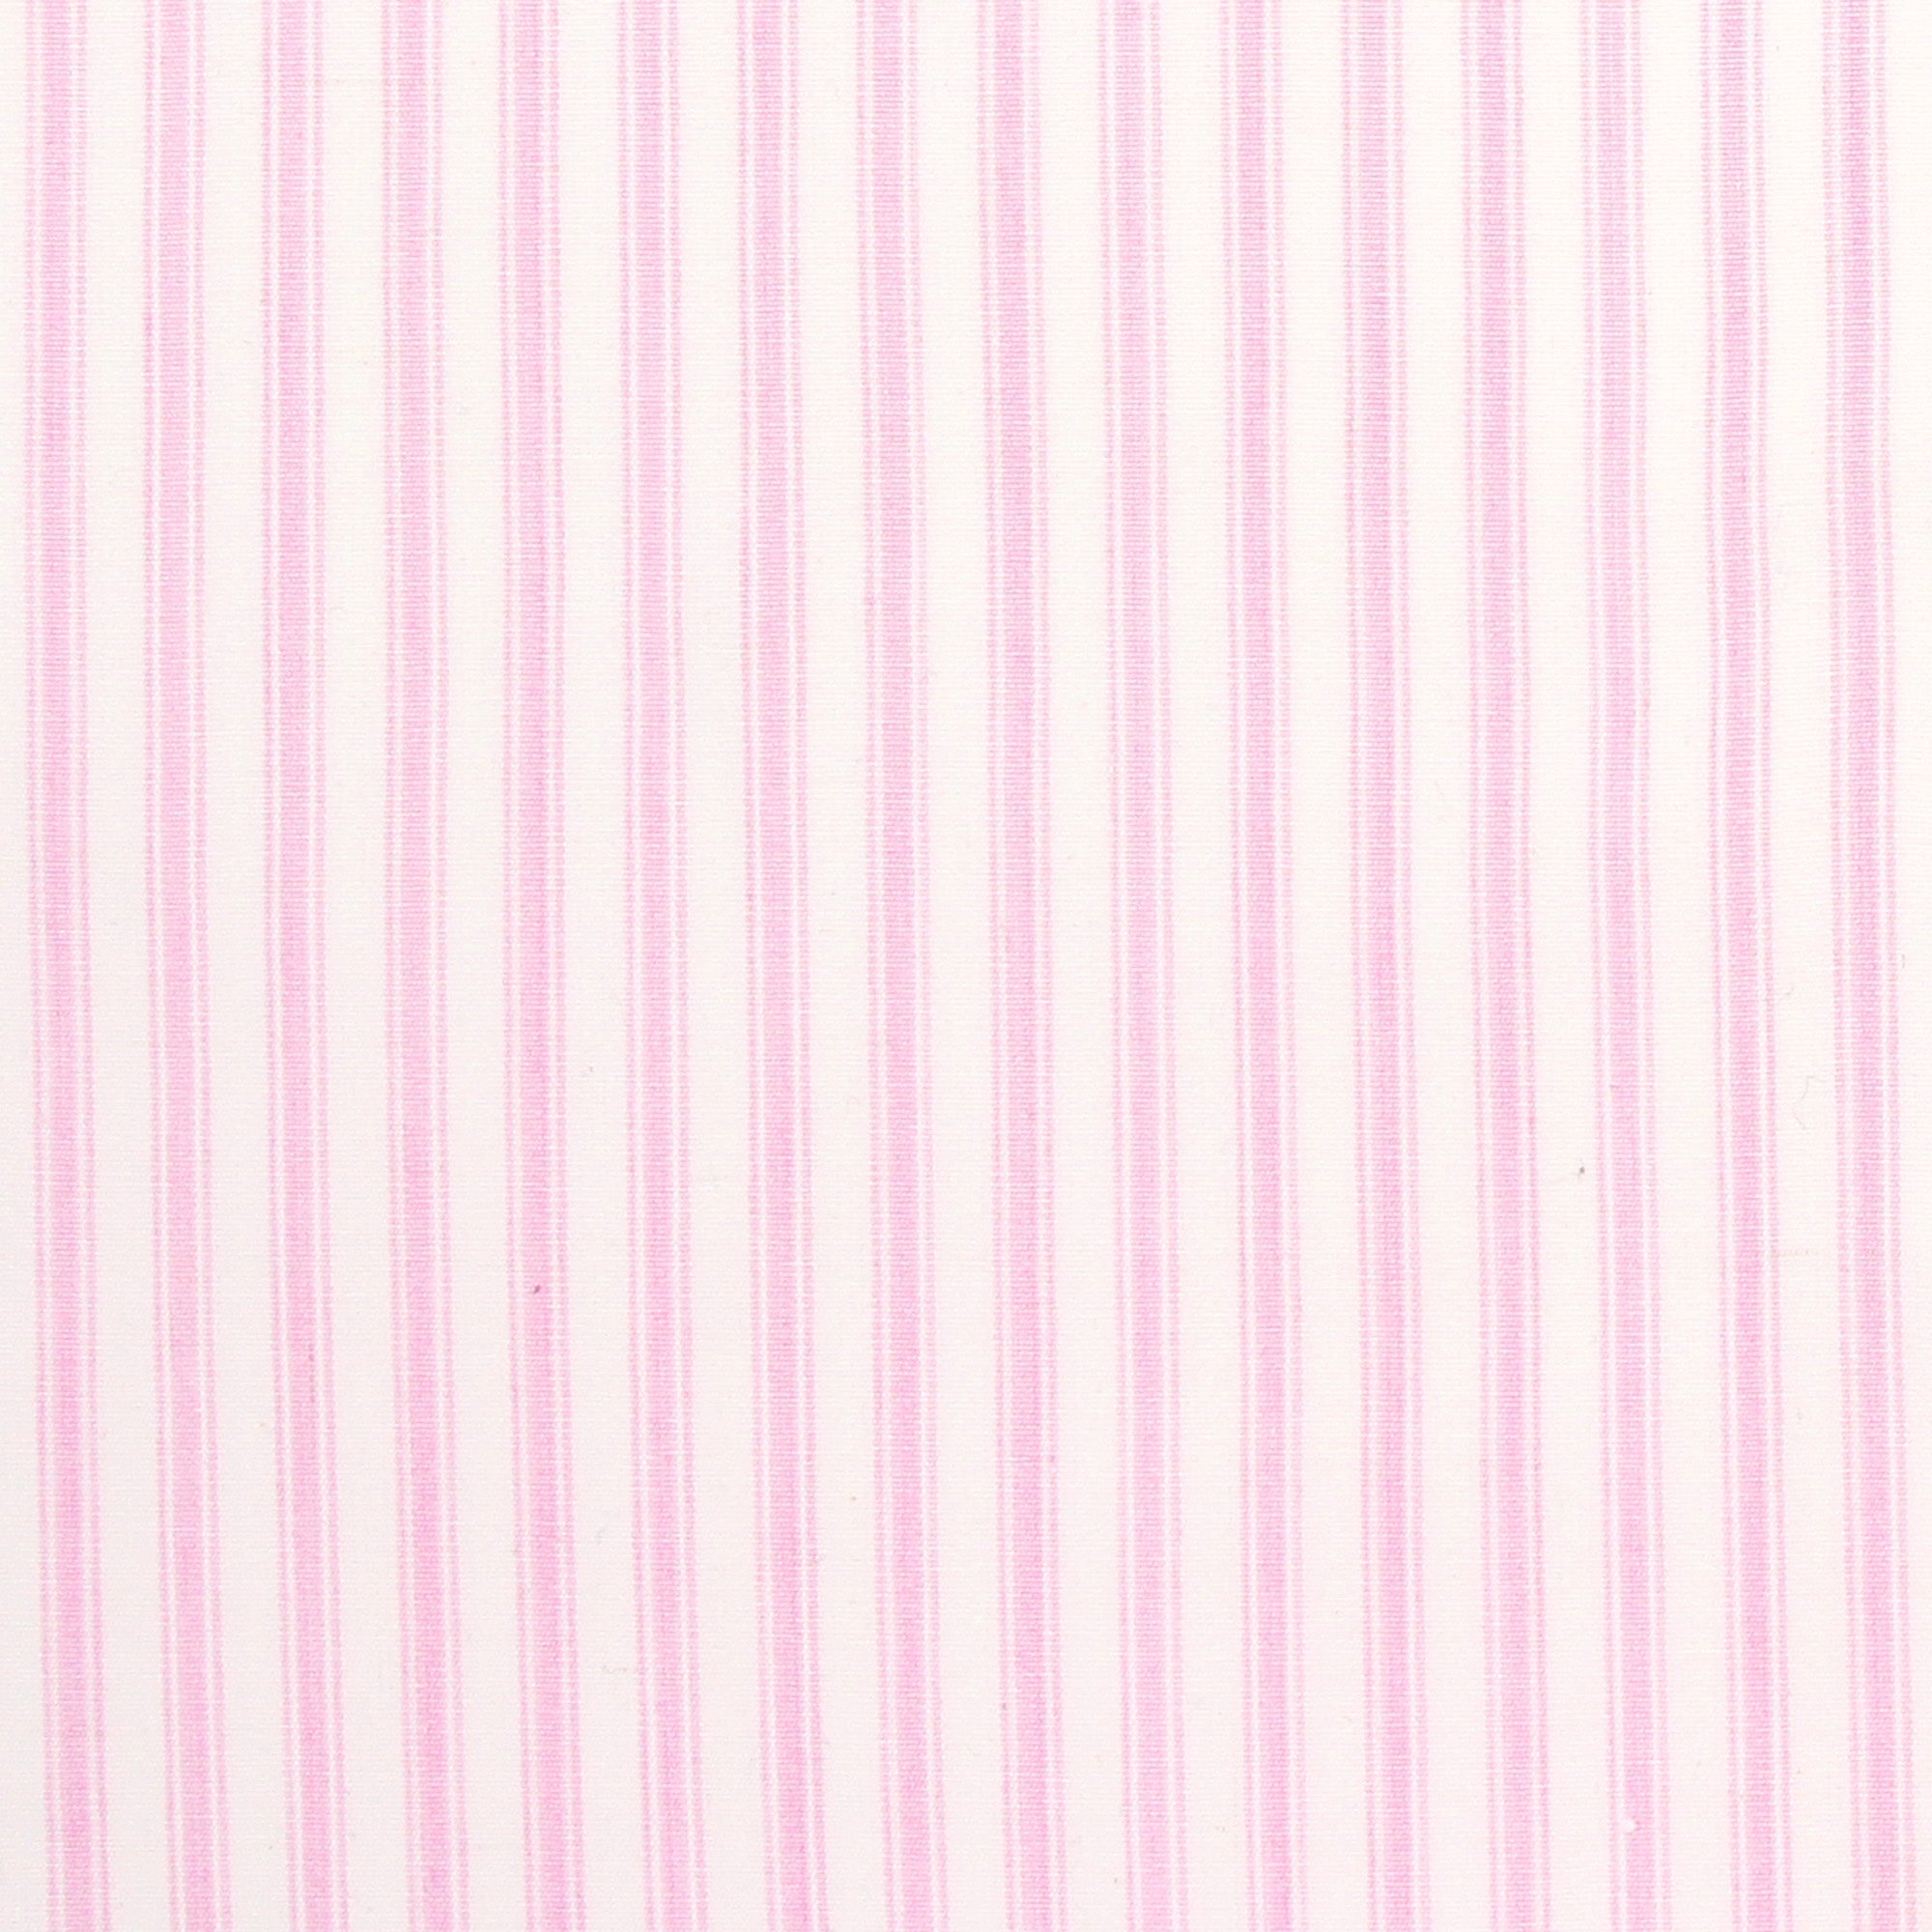 Parish Stripe Fabric in Pink Cotton Ticking Piece 7